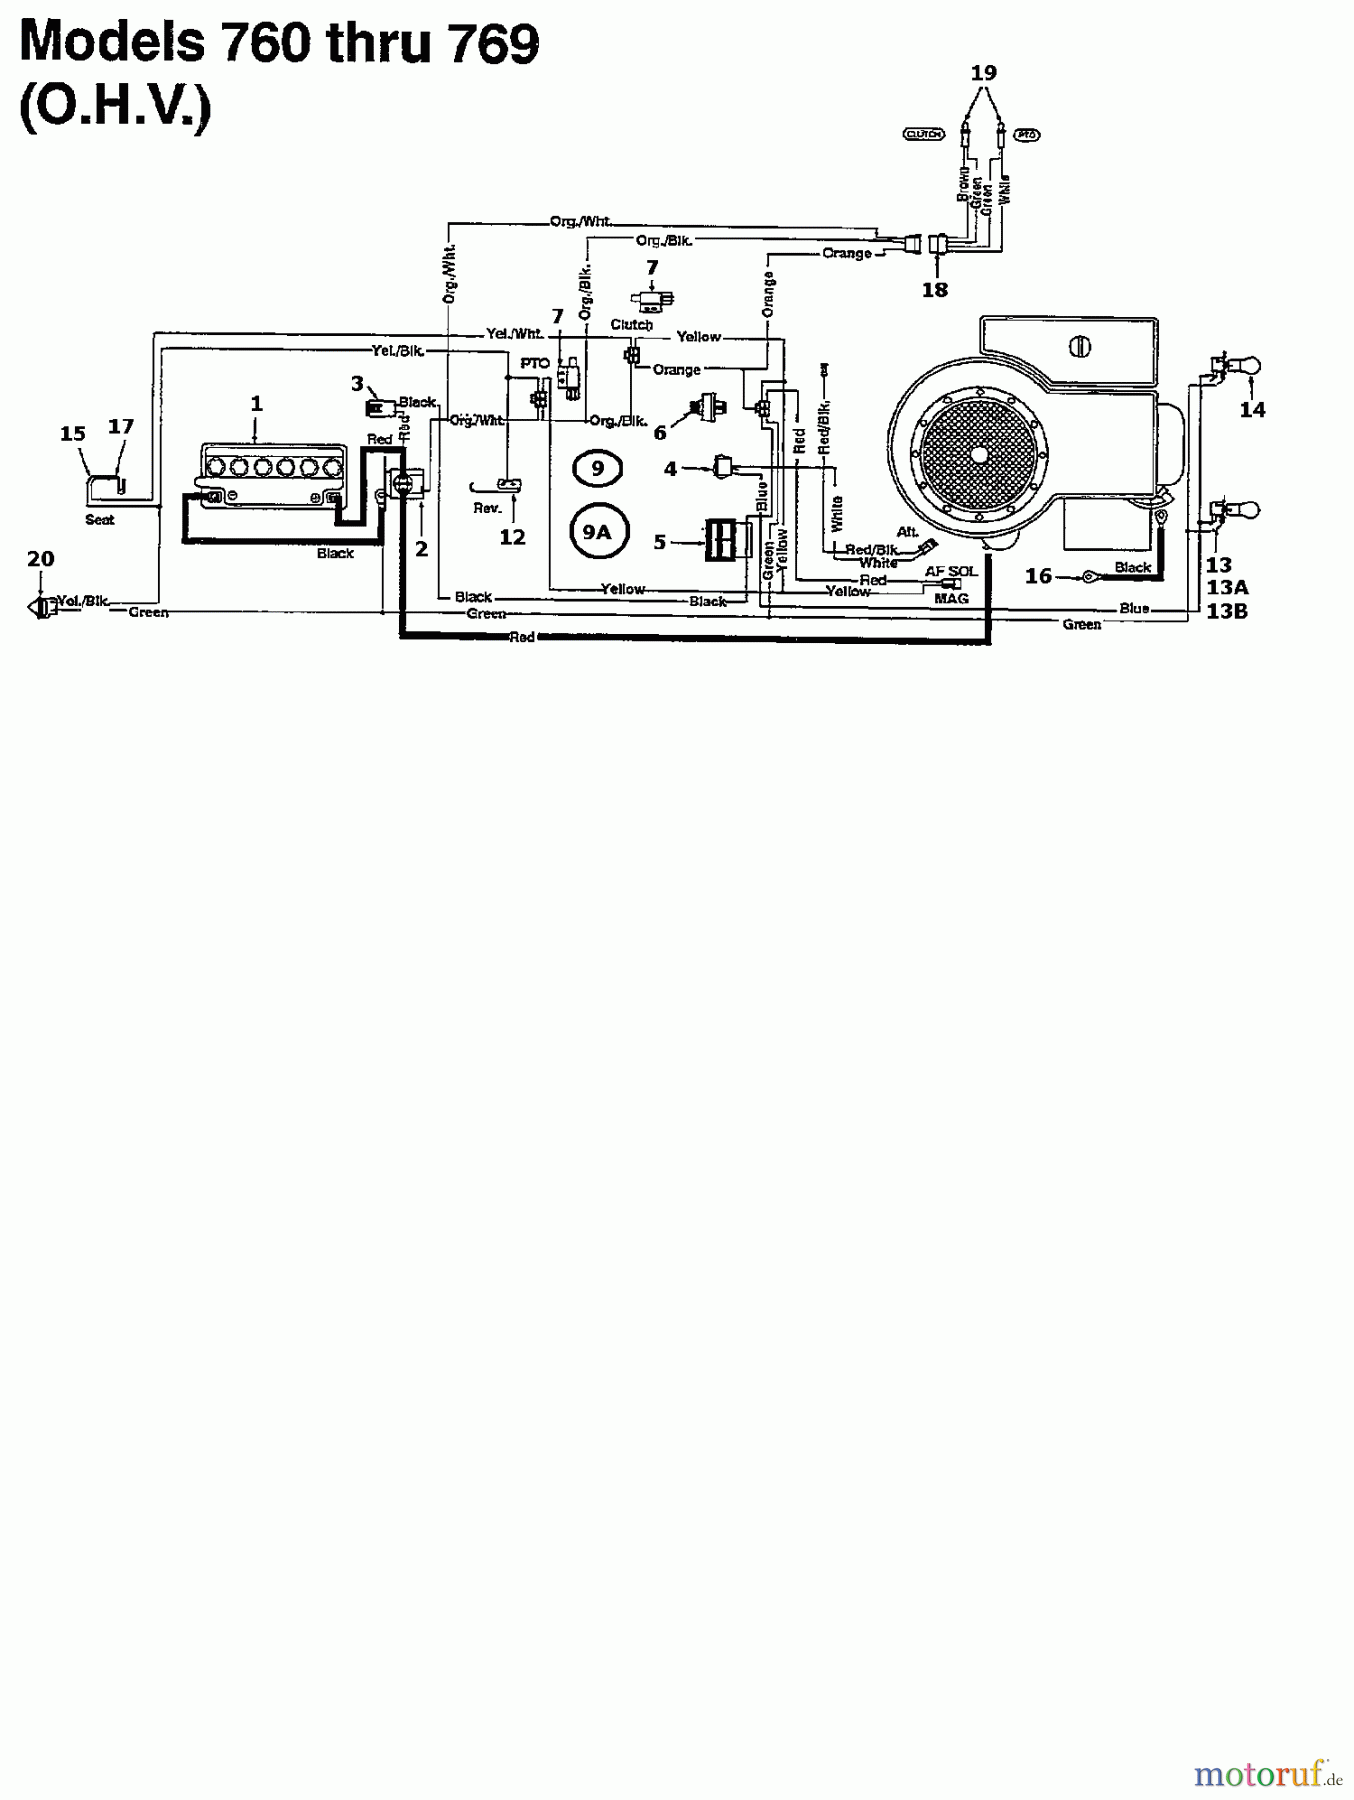  MTD Lawn tractors 125/102 134K765N678  (1994) Wiring diagram for O.H.V.